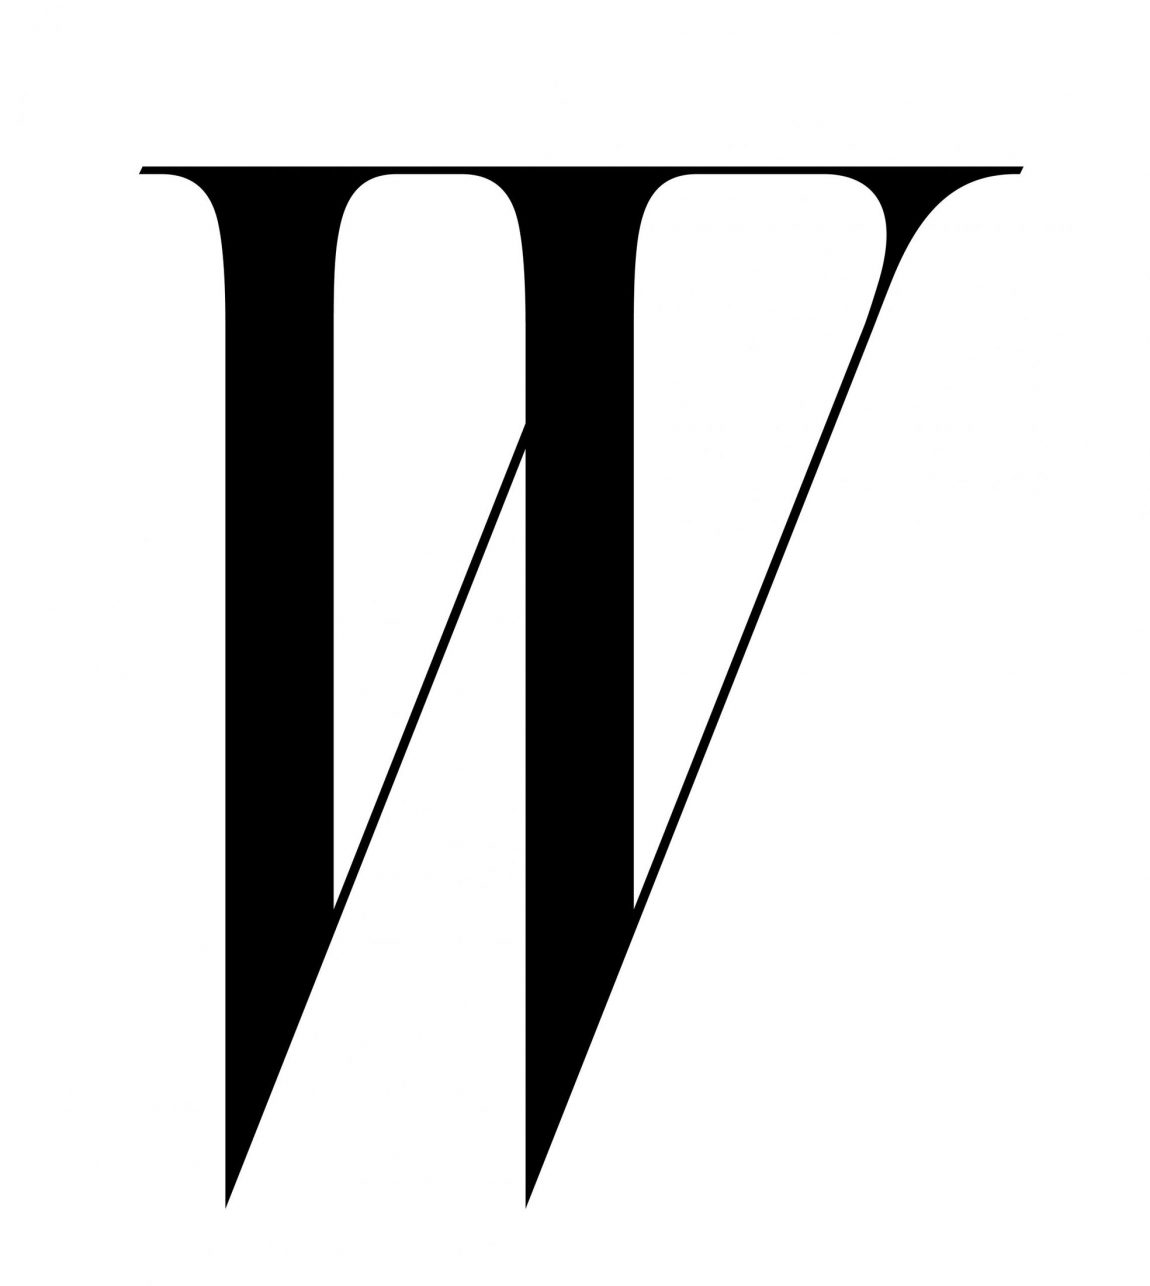 W magazine logo scaled